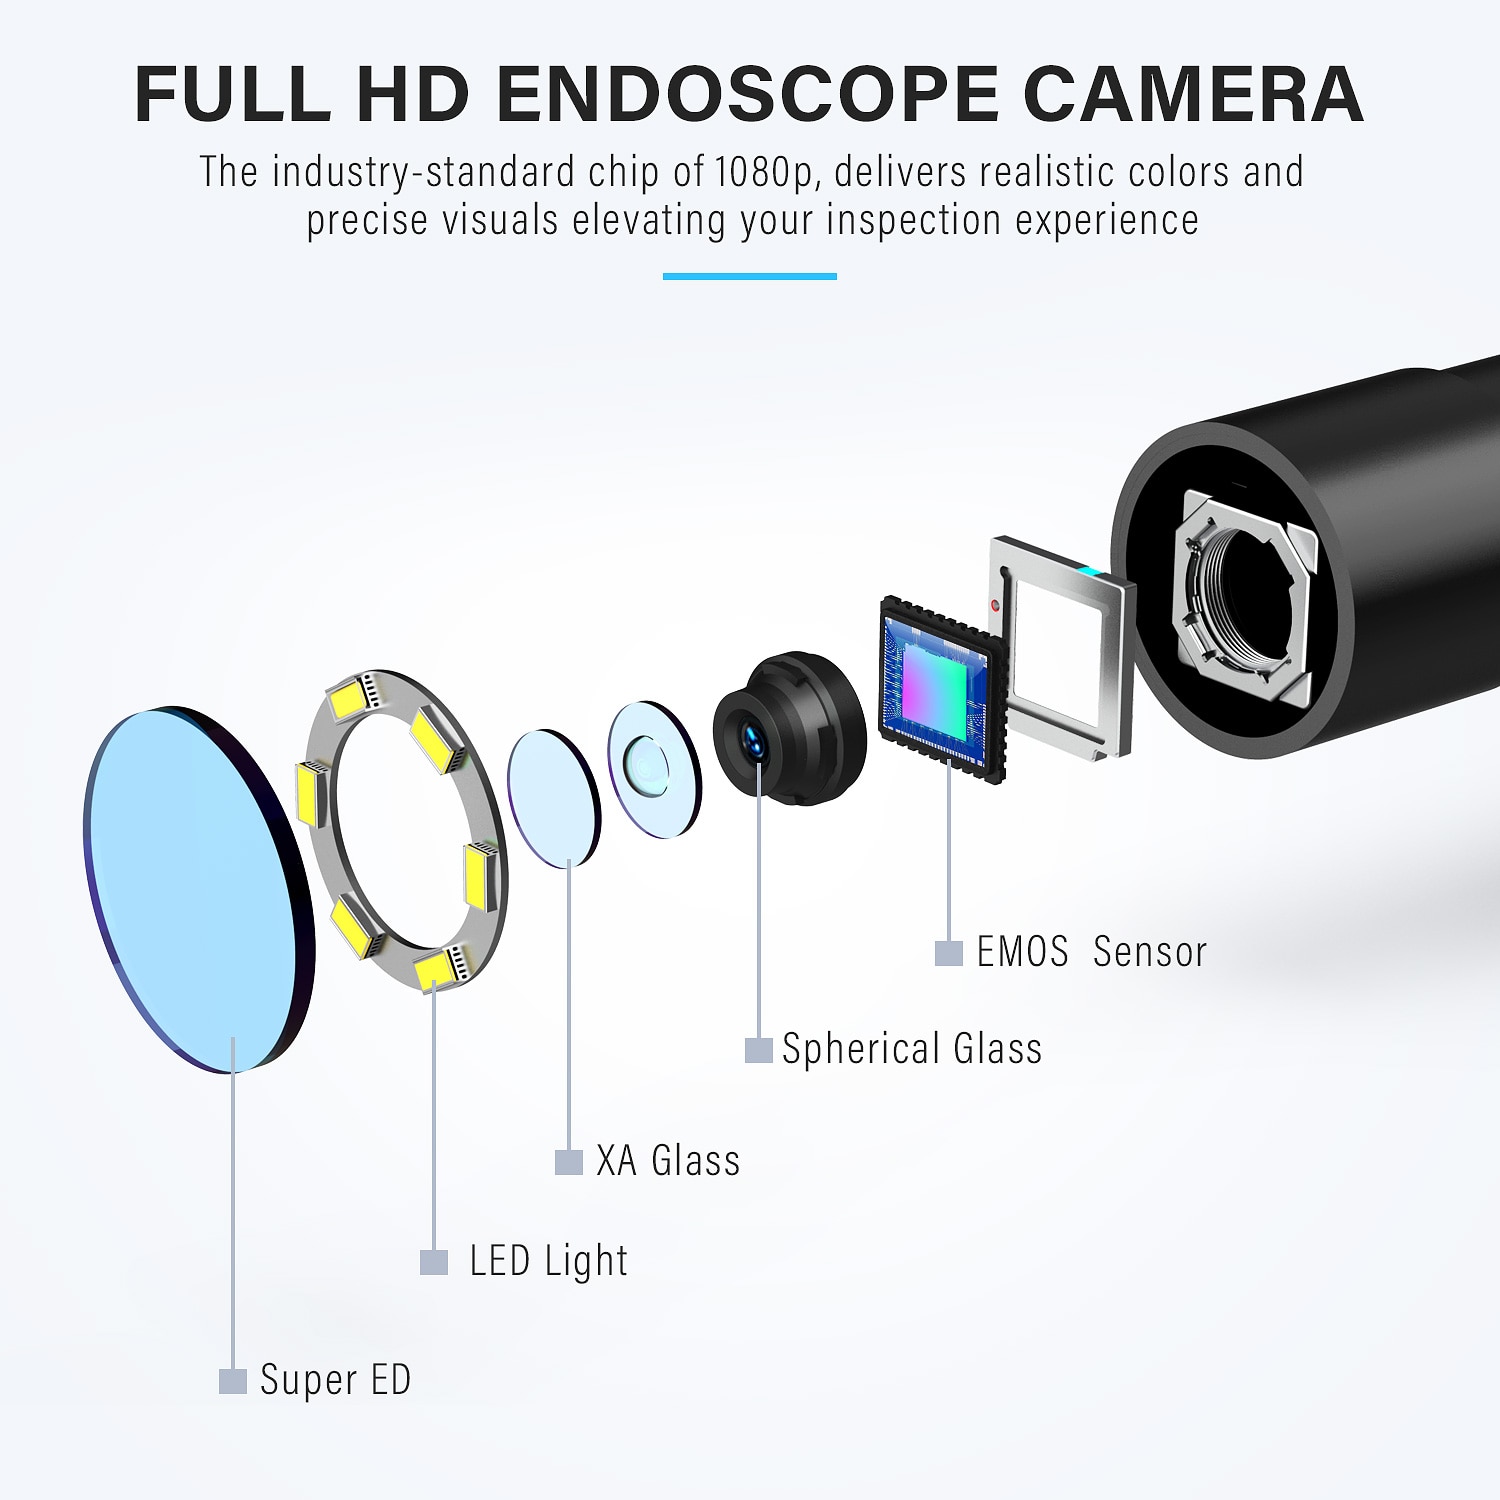 5.5mm Endoscope Camera